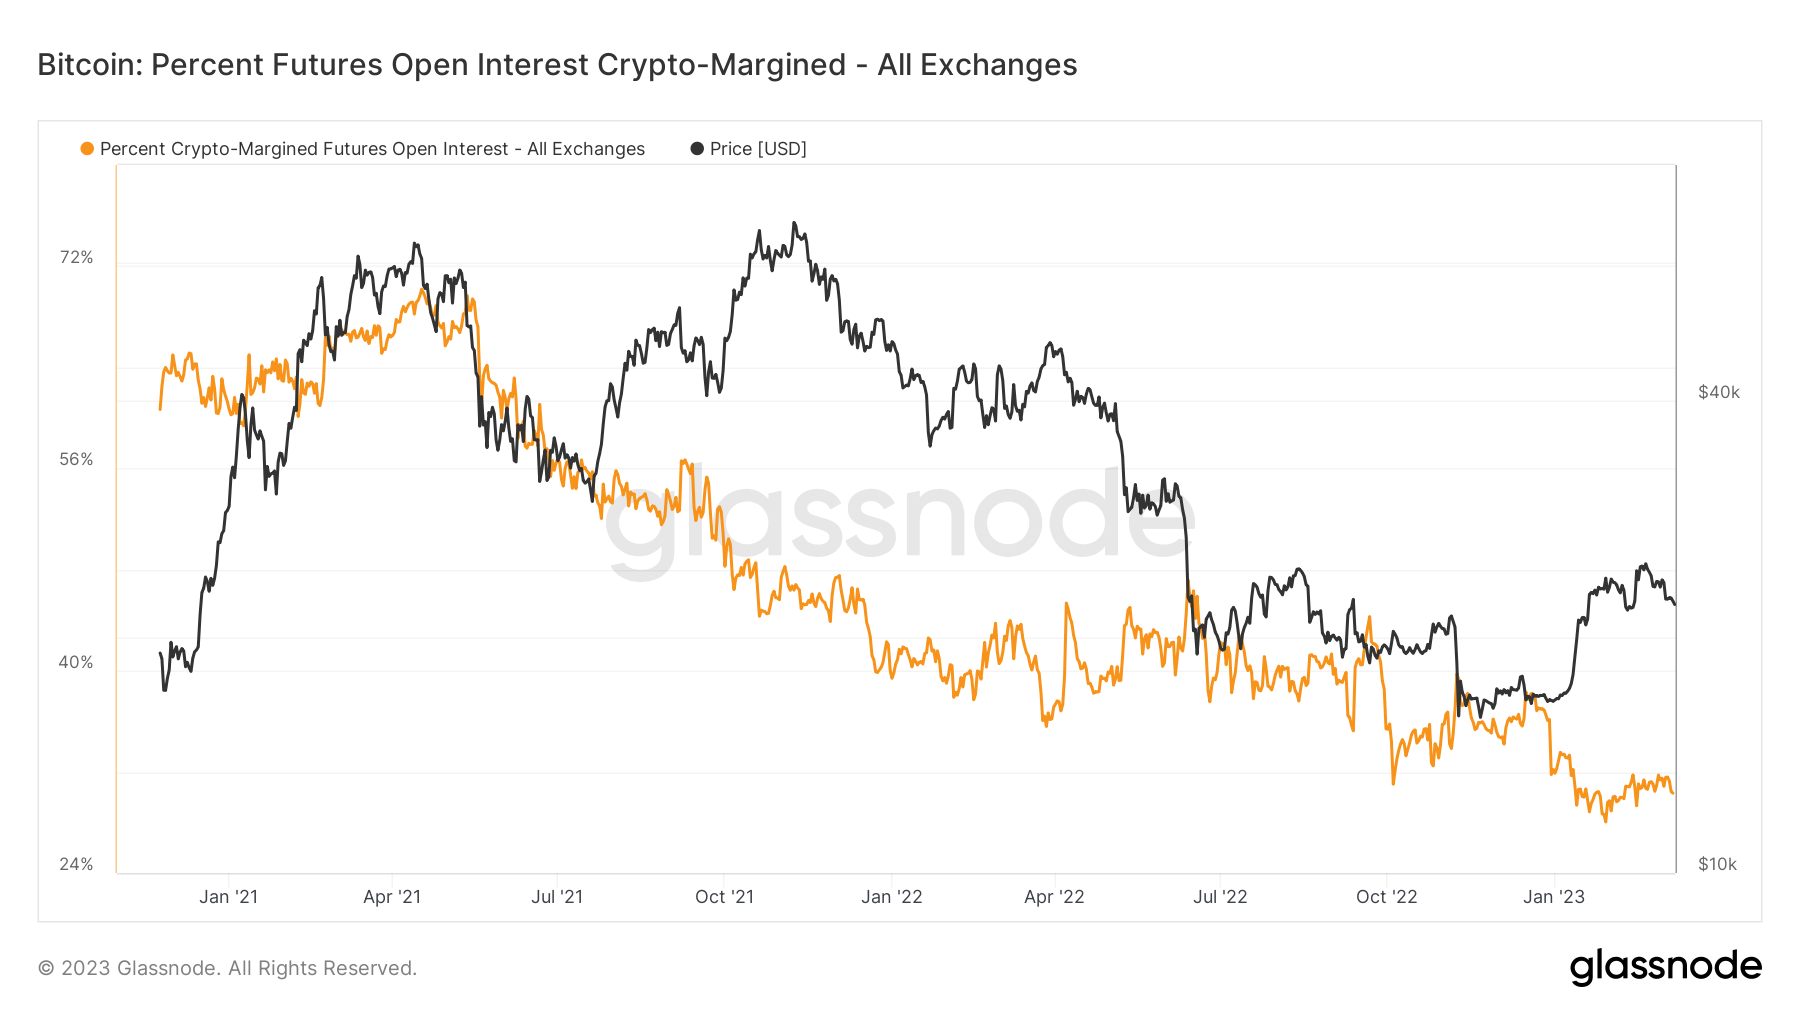 Futures Open Interest Crypto Margined : (Source : Glassnode)